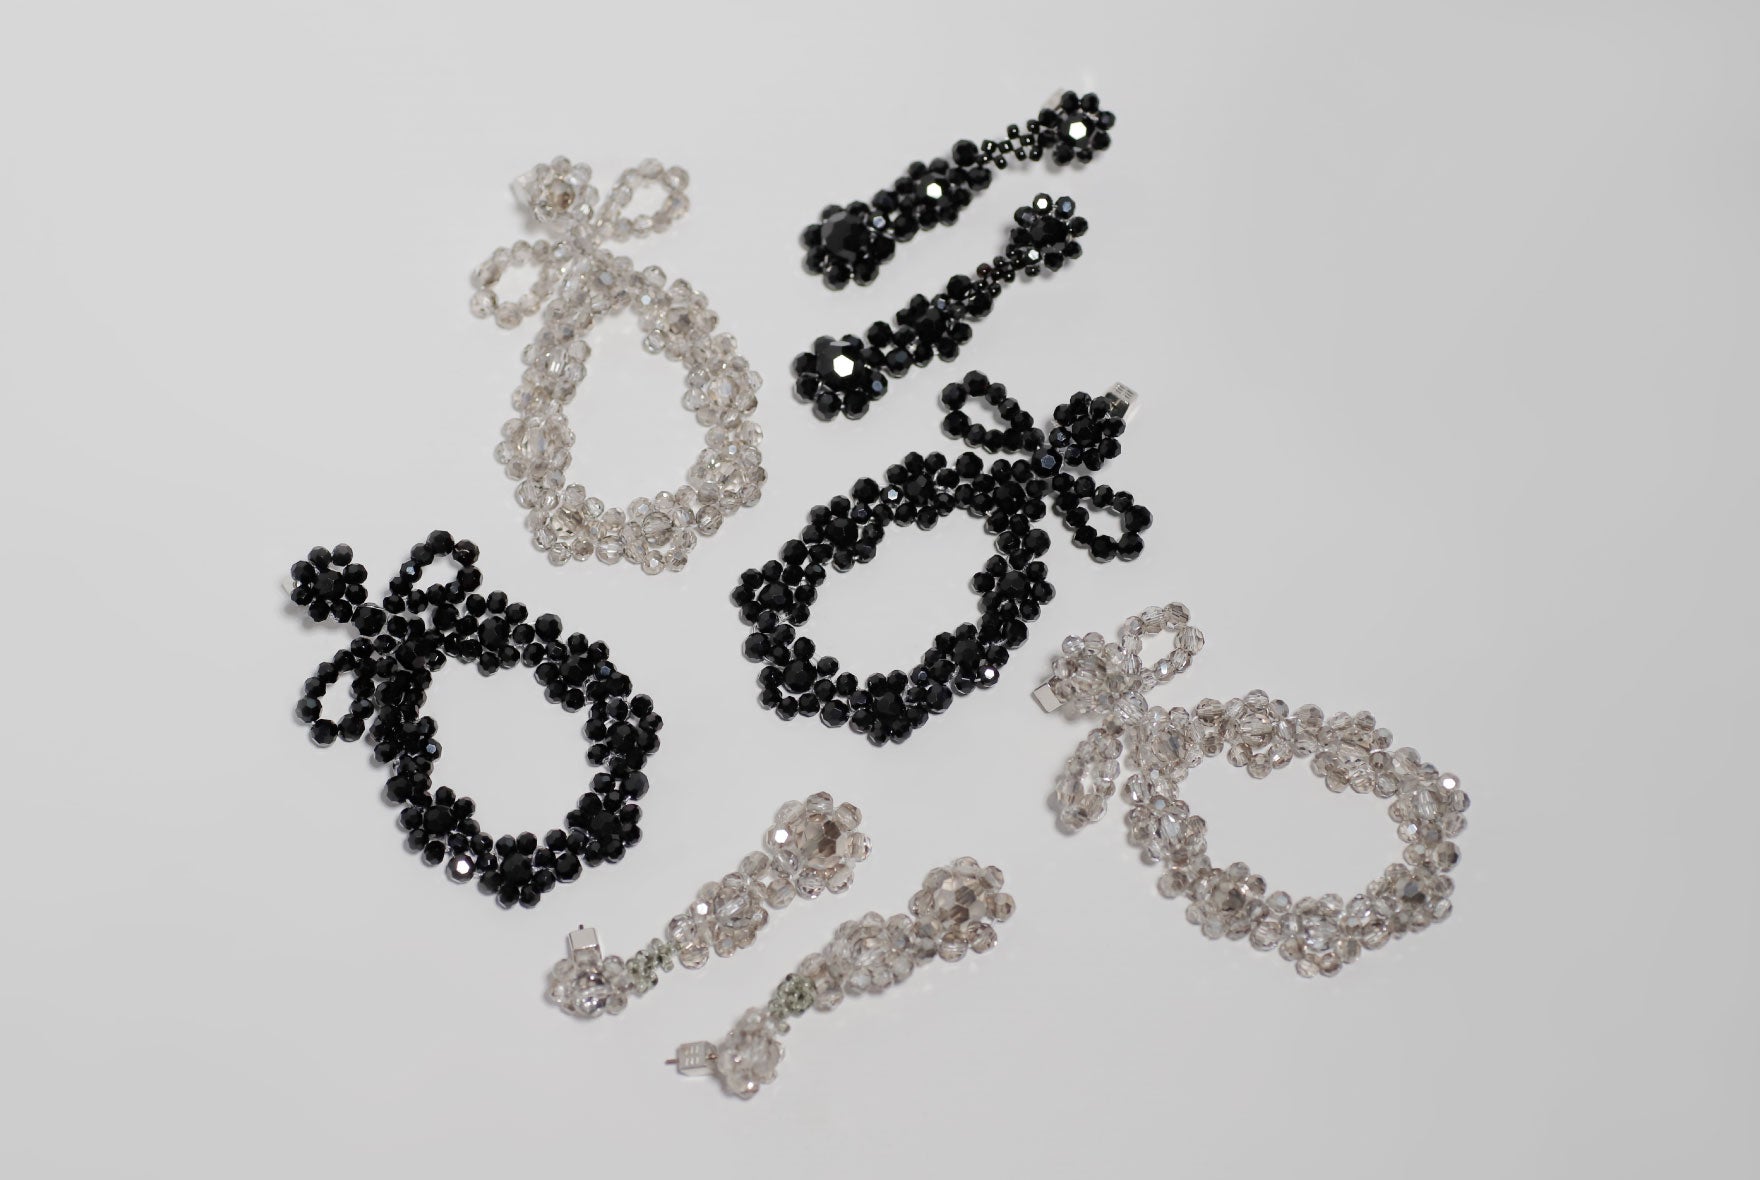 beads earrings